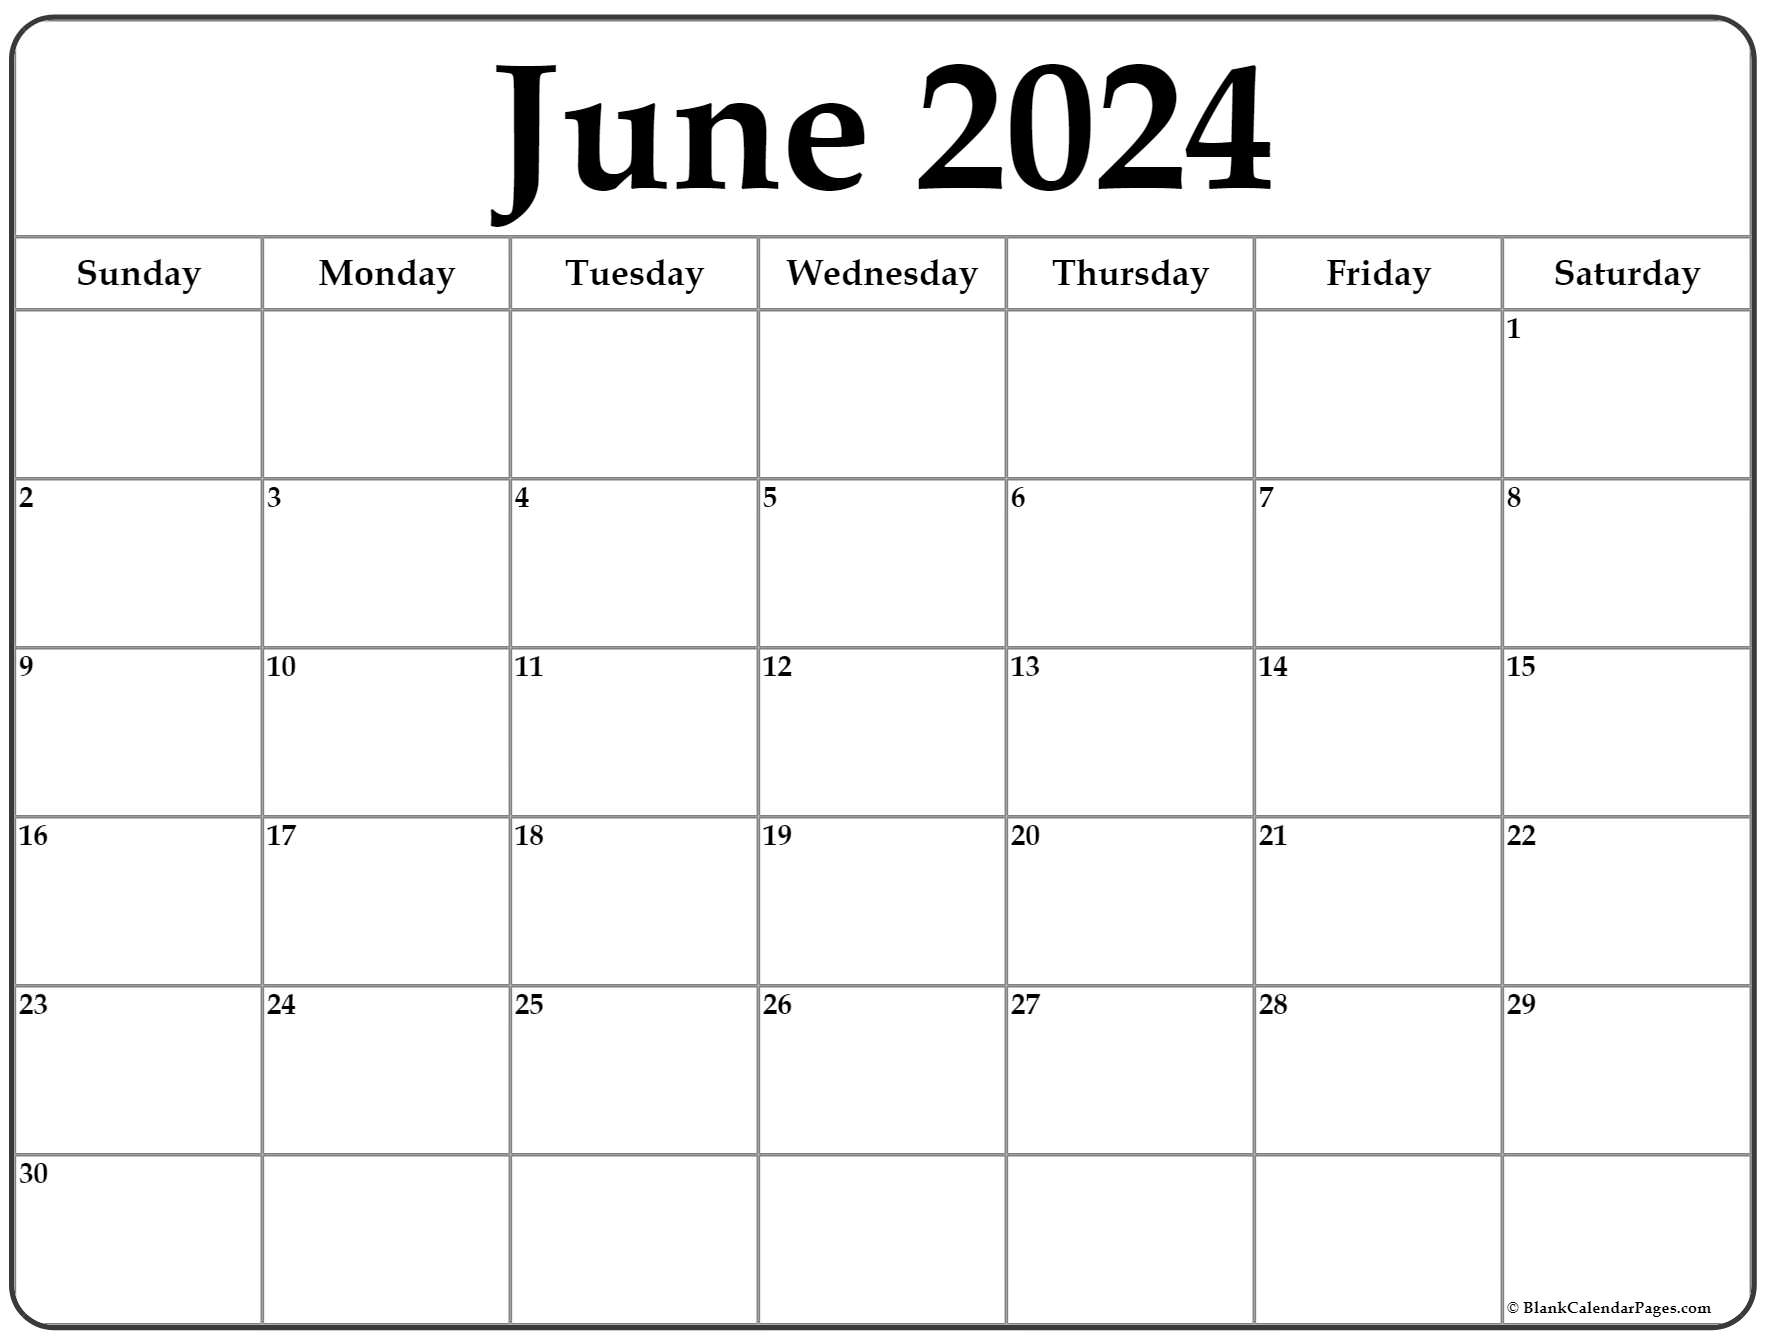 Free June Calendar 2022 June 2022 Calendar | Free Printable Calendar Templates